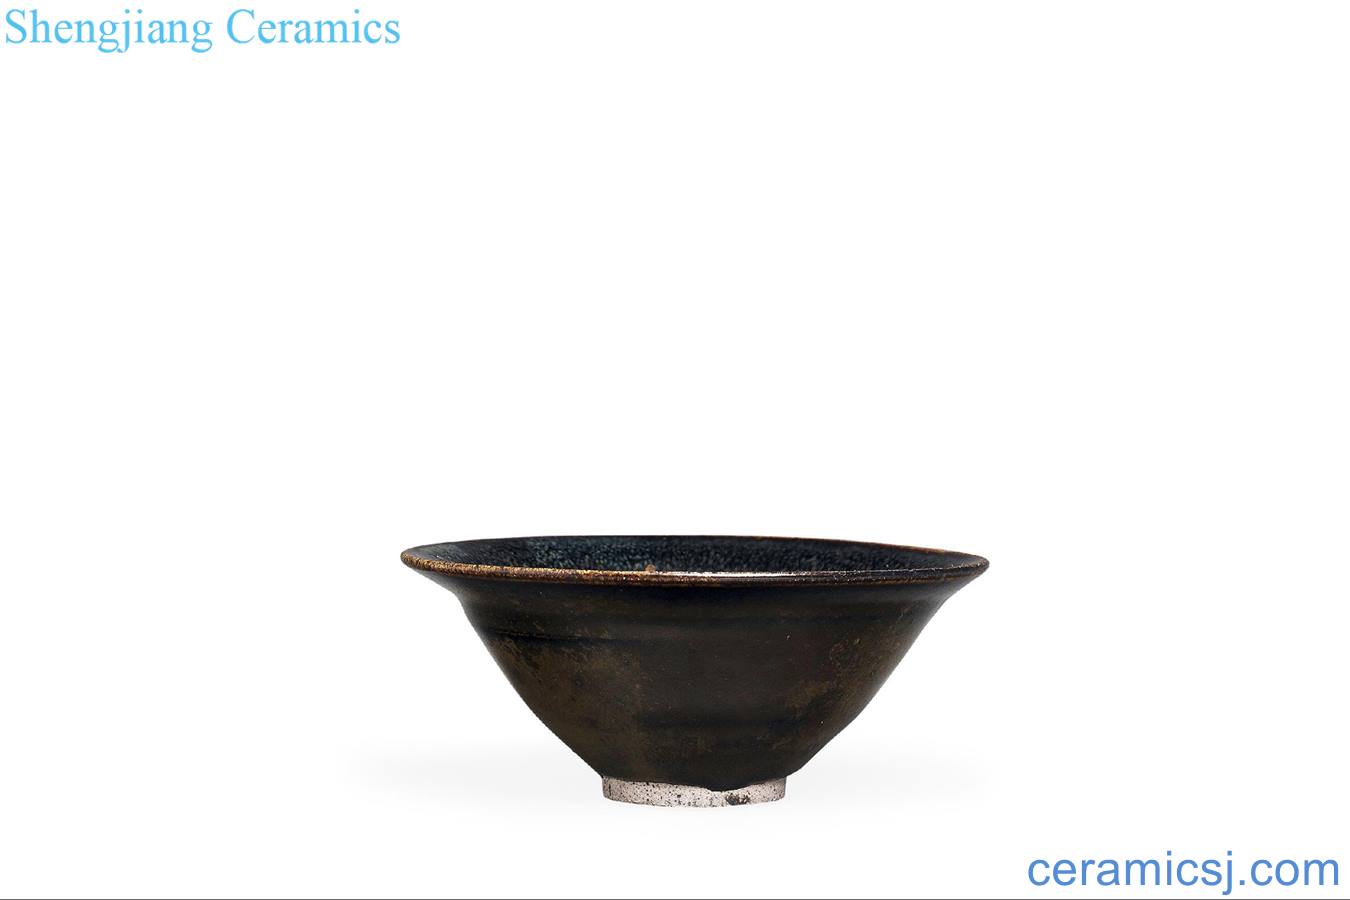 Ming or earlier Shanxi black glaze blotches fullness